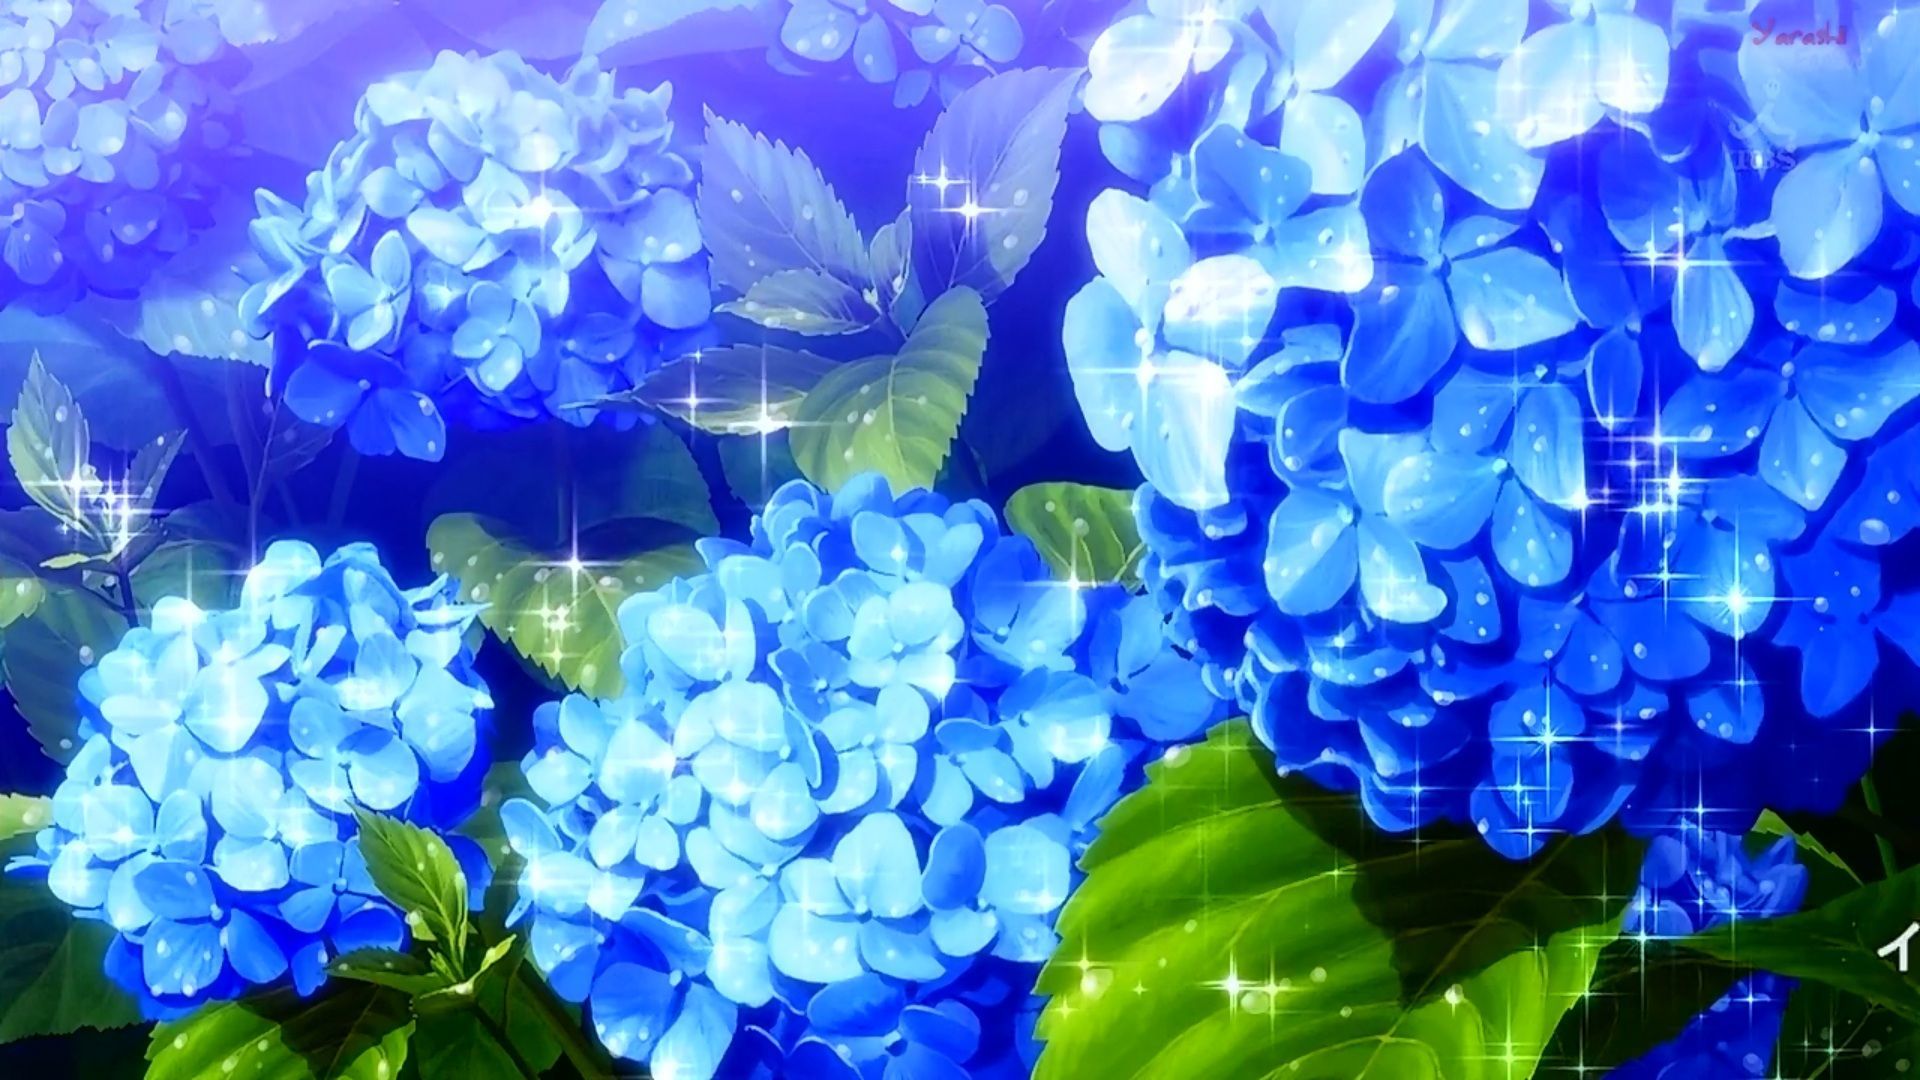 Anime Flower Scenery Wallpaper Desktop Wallpaper. Anime flower, Blue flower wallpaper, Anime scenery